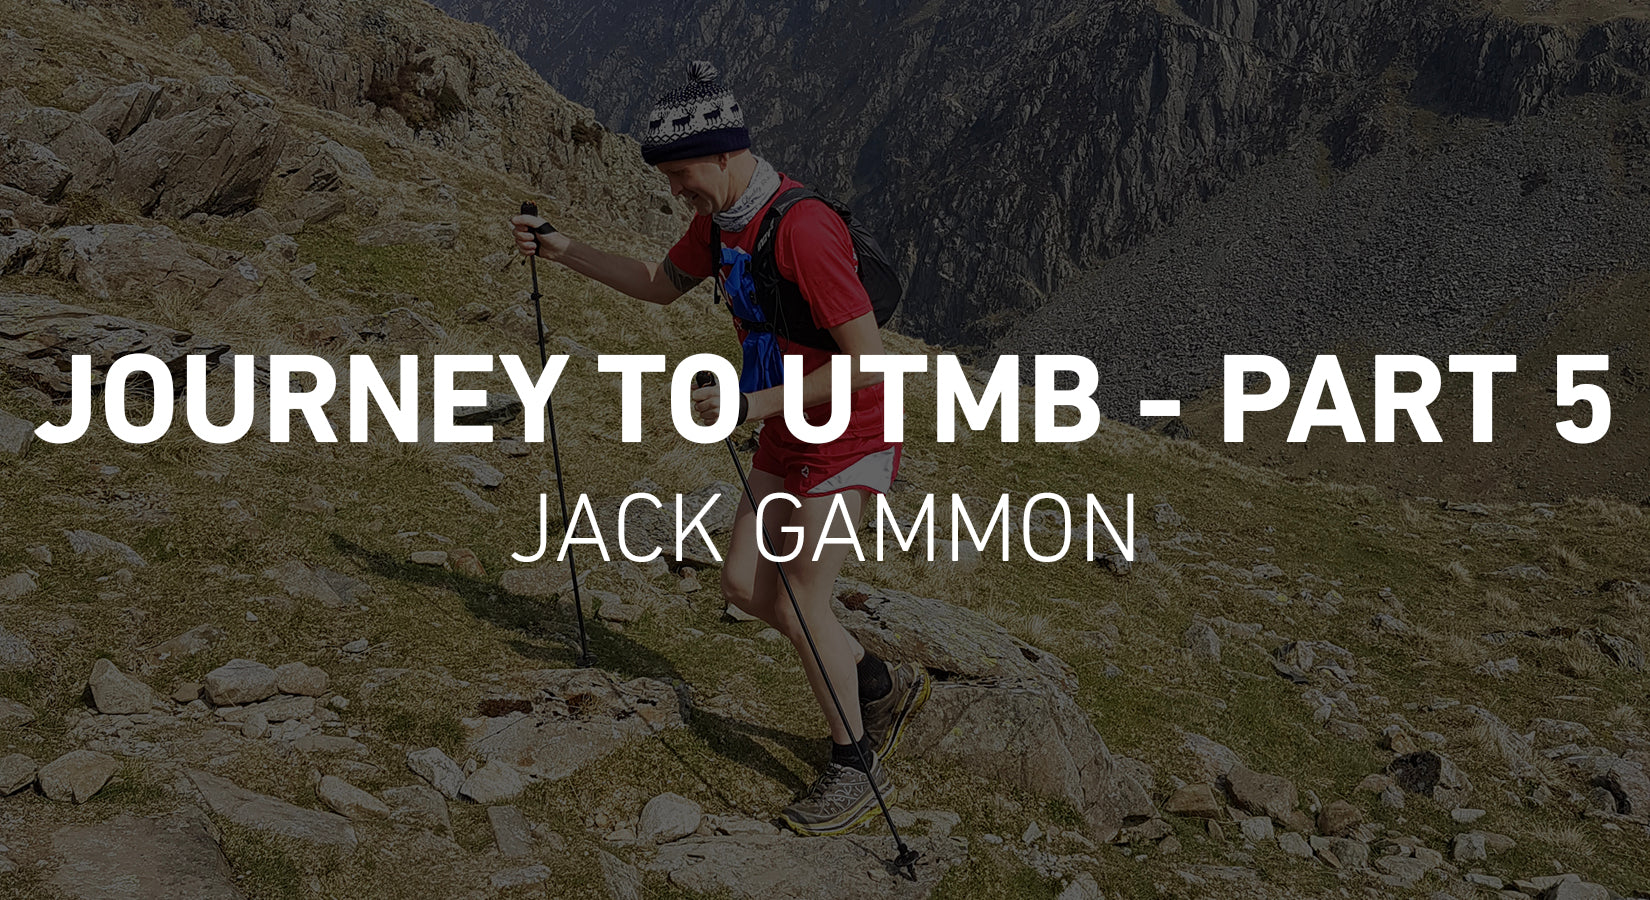 Journey to UTMB Part 5 Jack Gammon